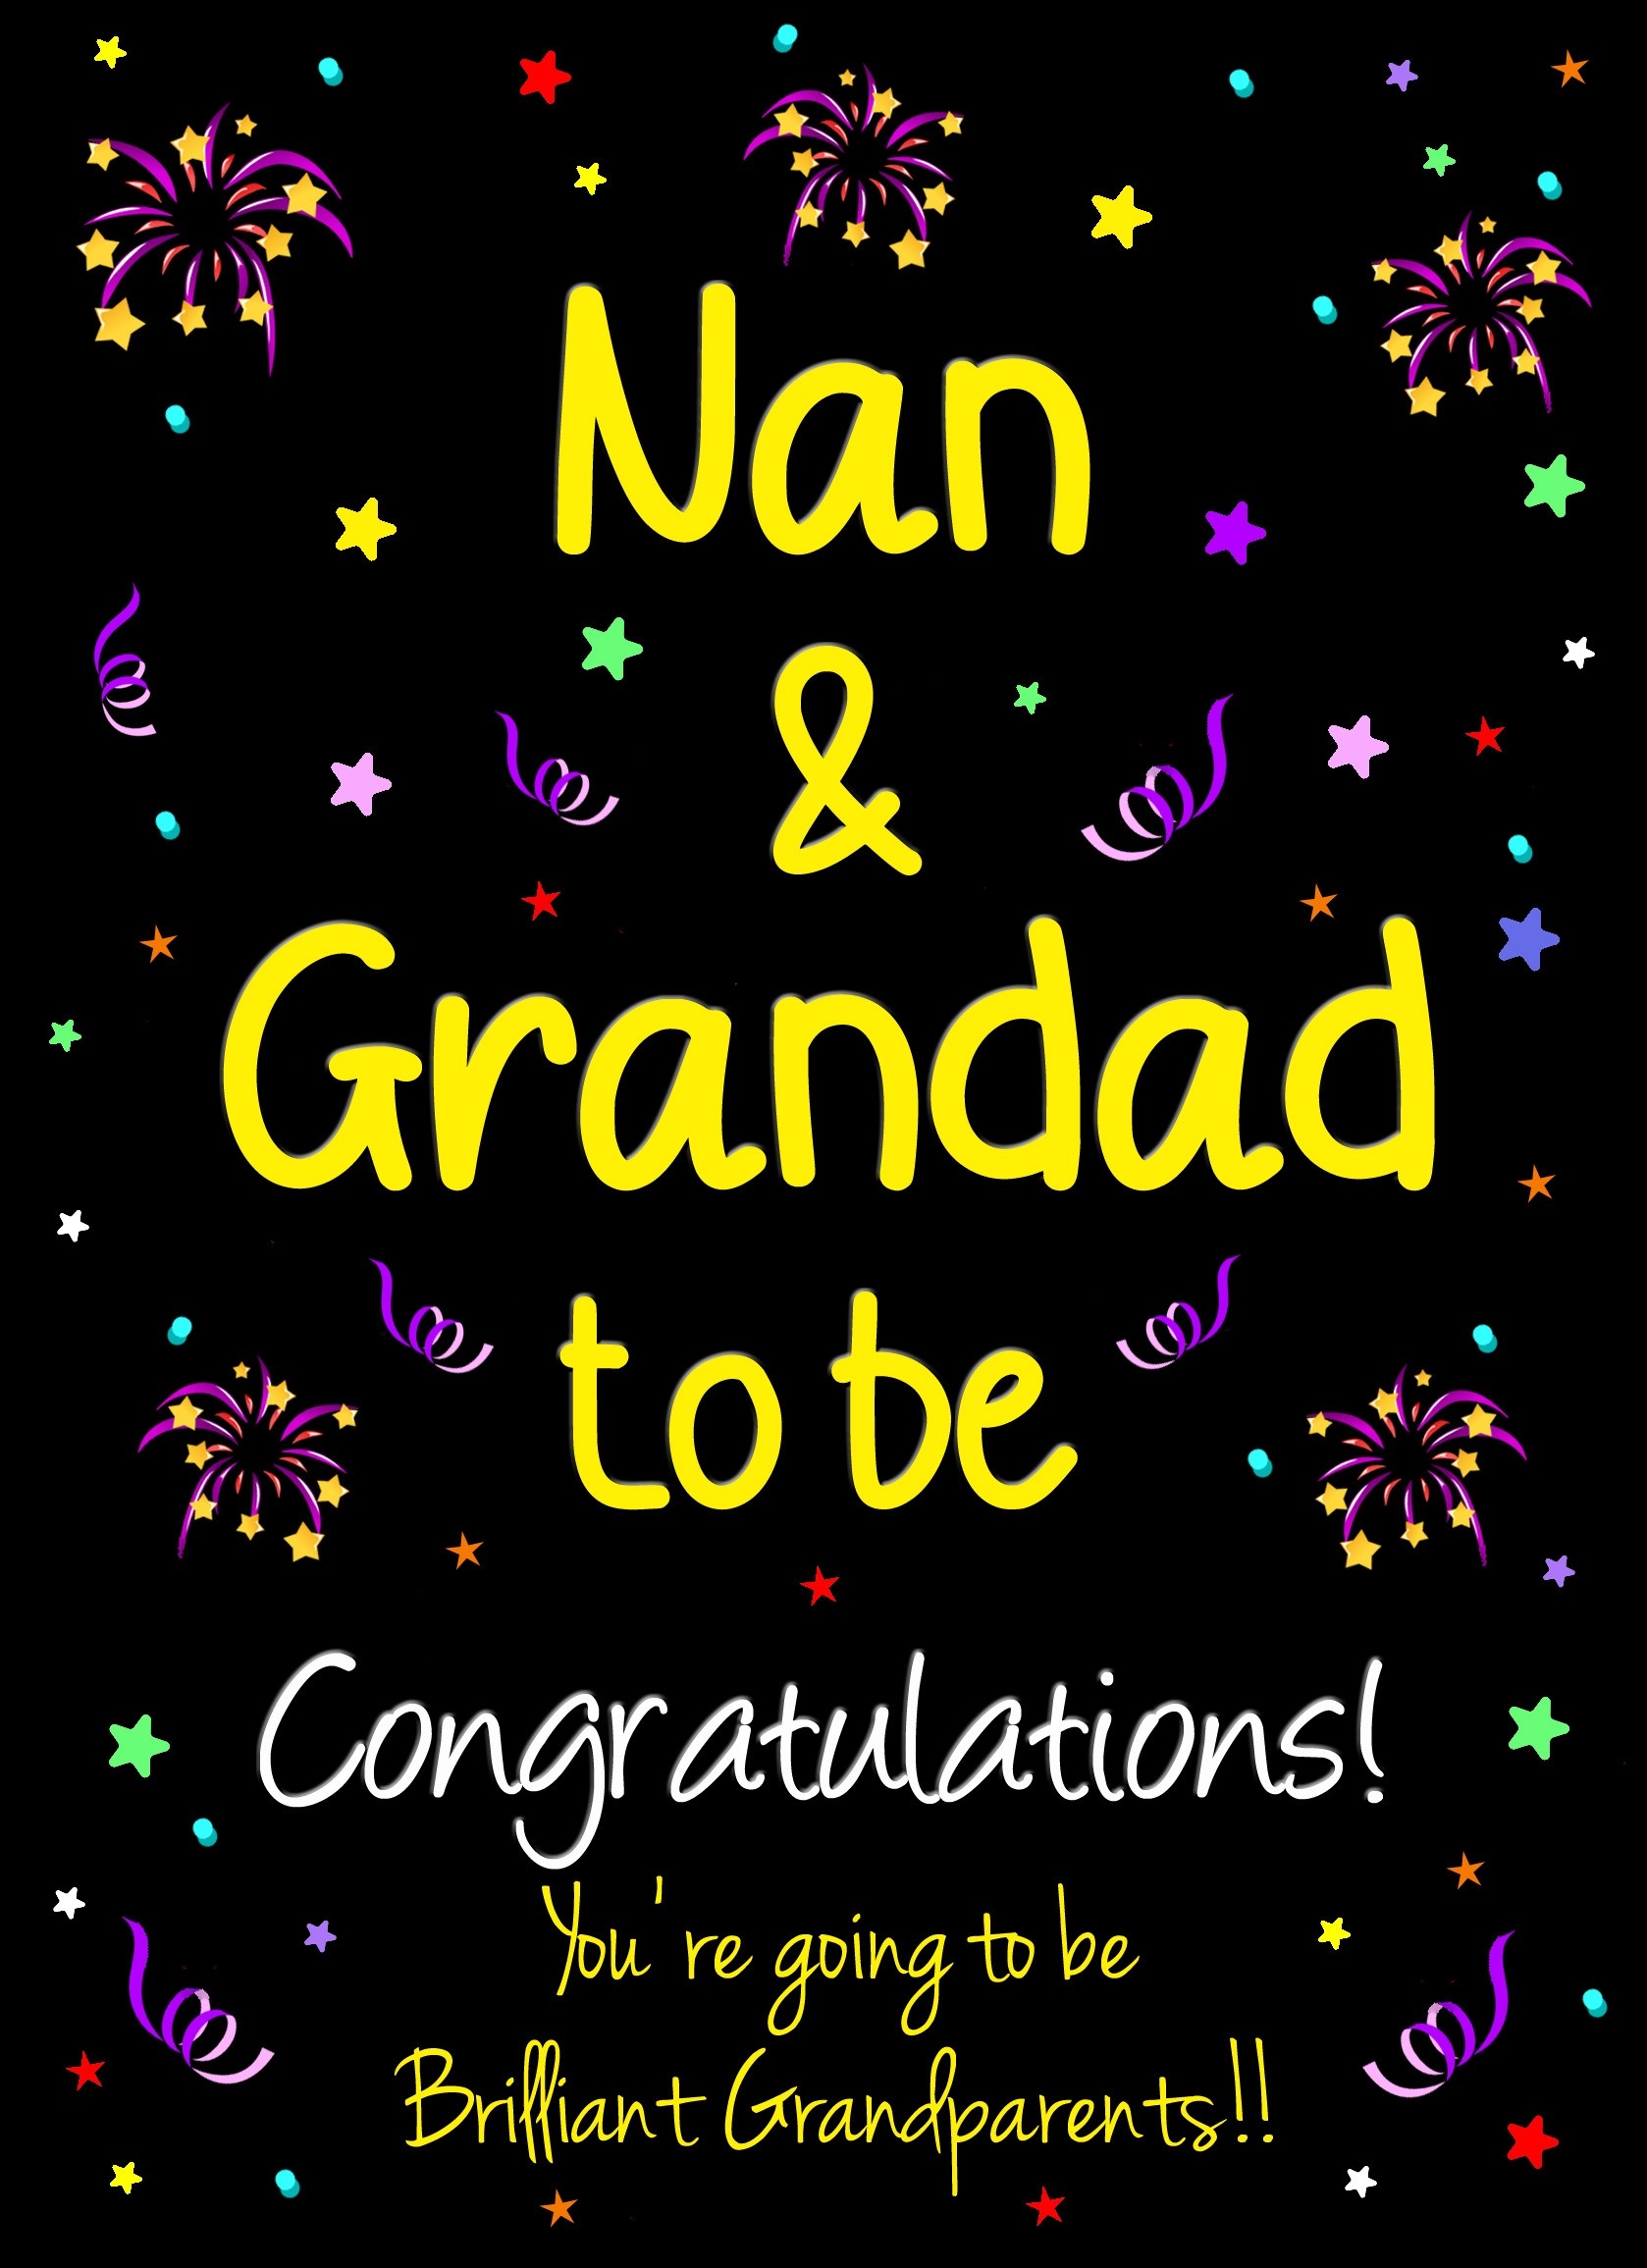 Nan and Grandad To Be Baby Pregnancy Congratulations Card